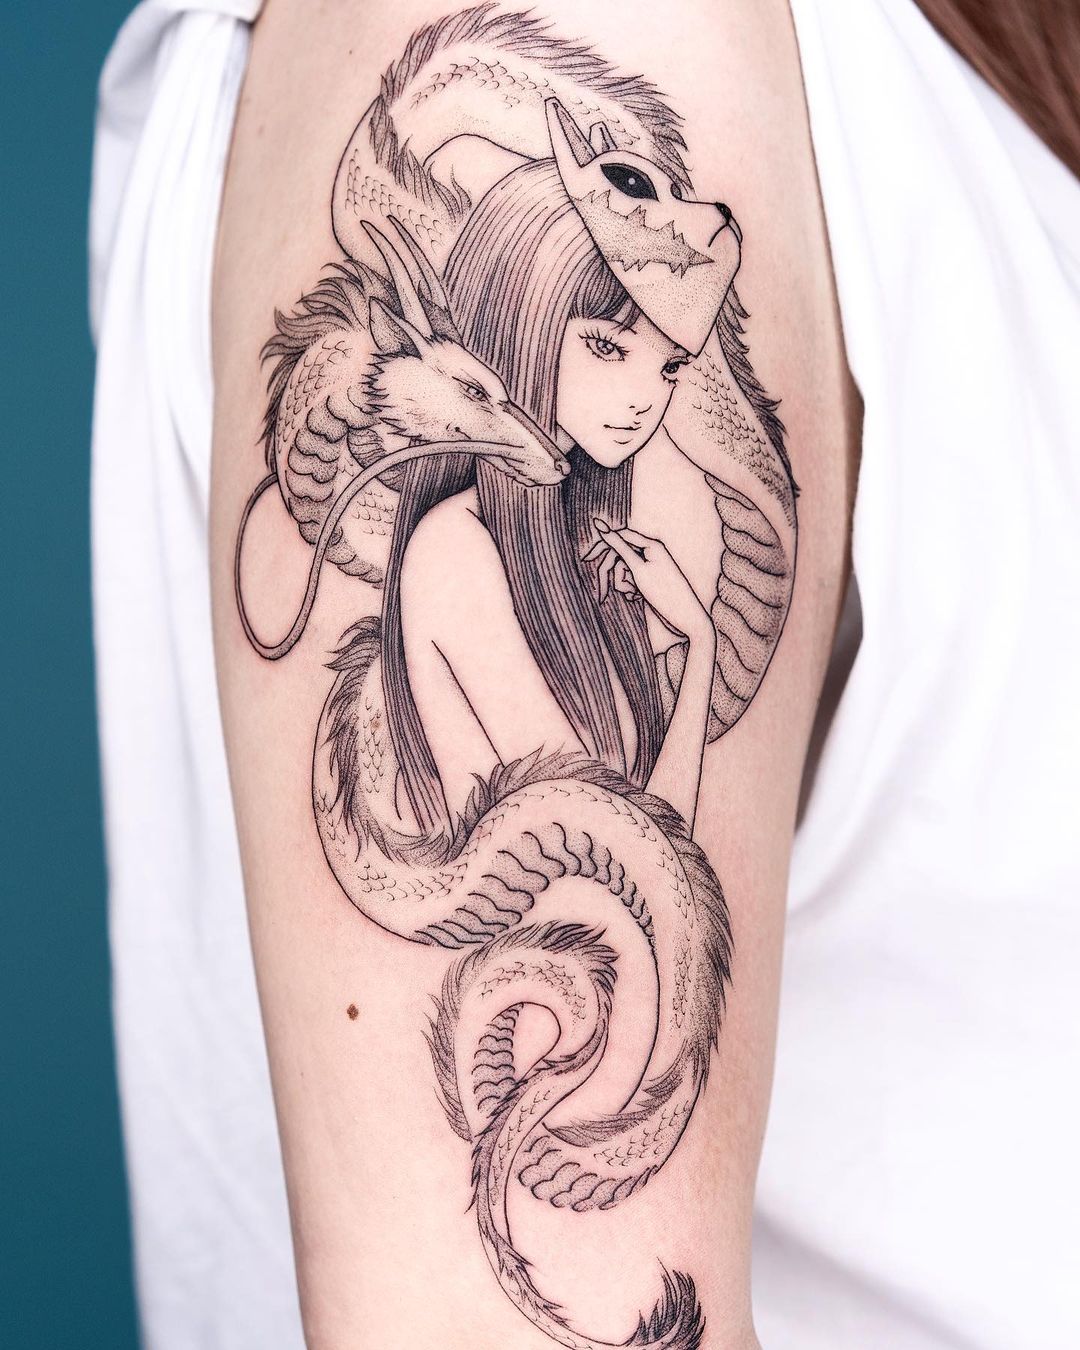 Phoenix female tattoo design by EmmaJaneOGrady on DeviantArt